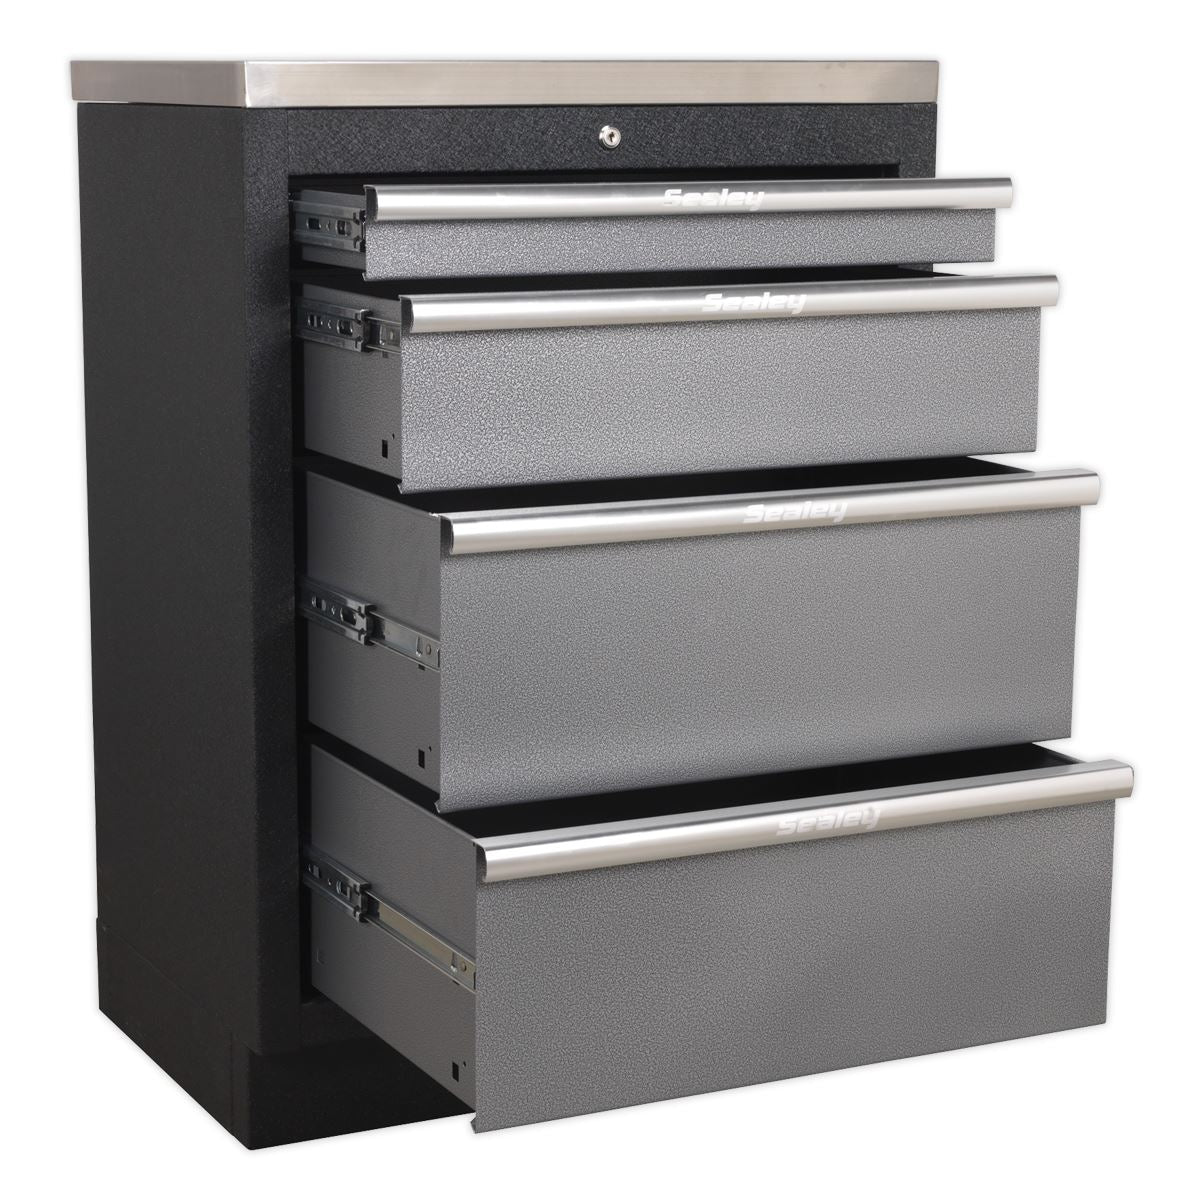 Sealey Superline Pro Modular 4 Drawer Cabinet 680mm